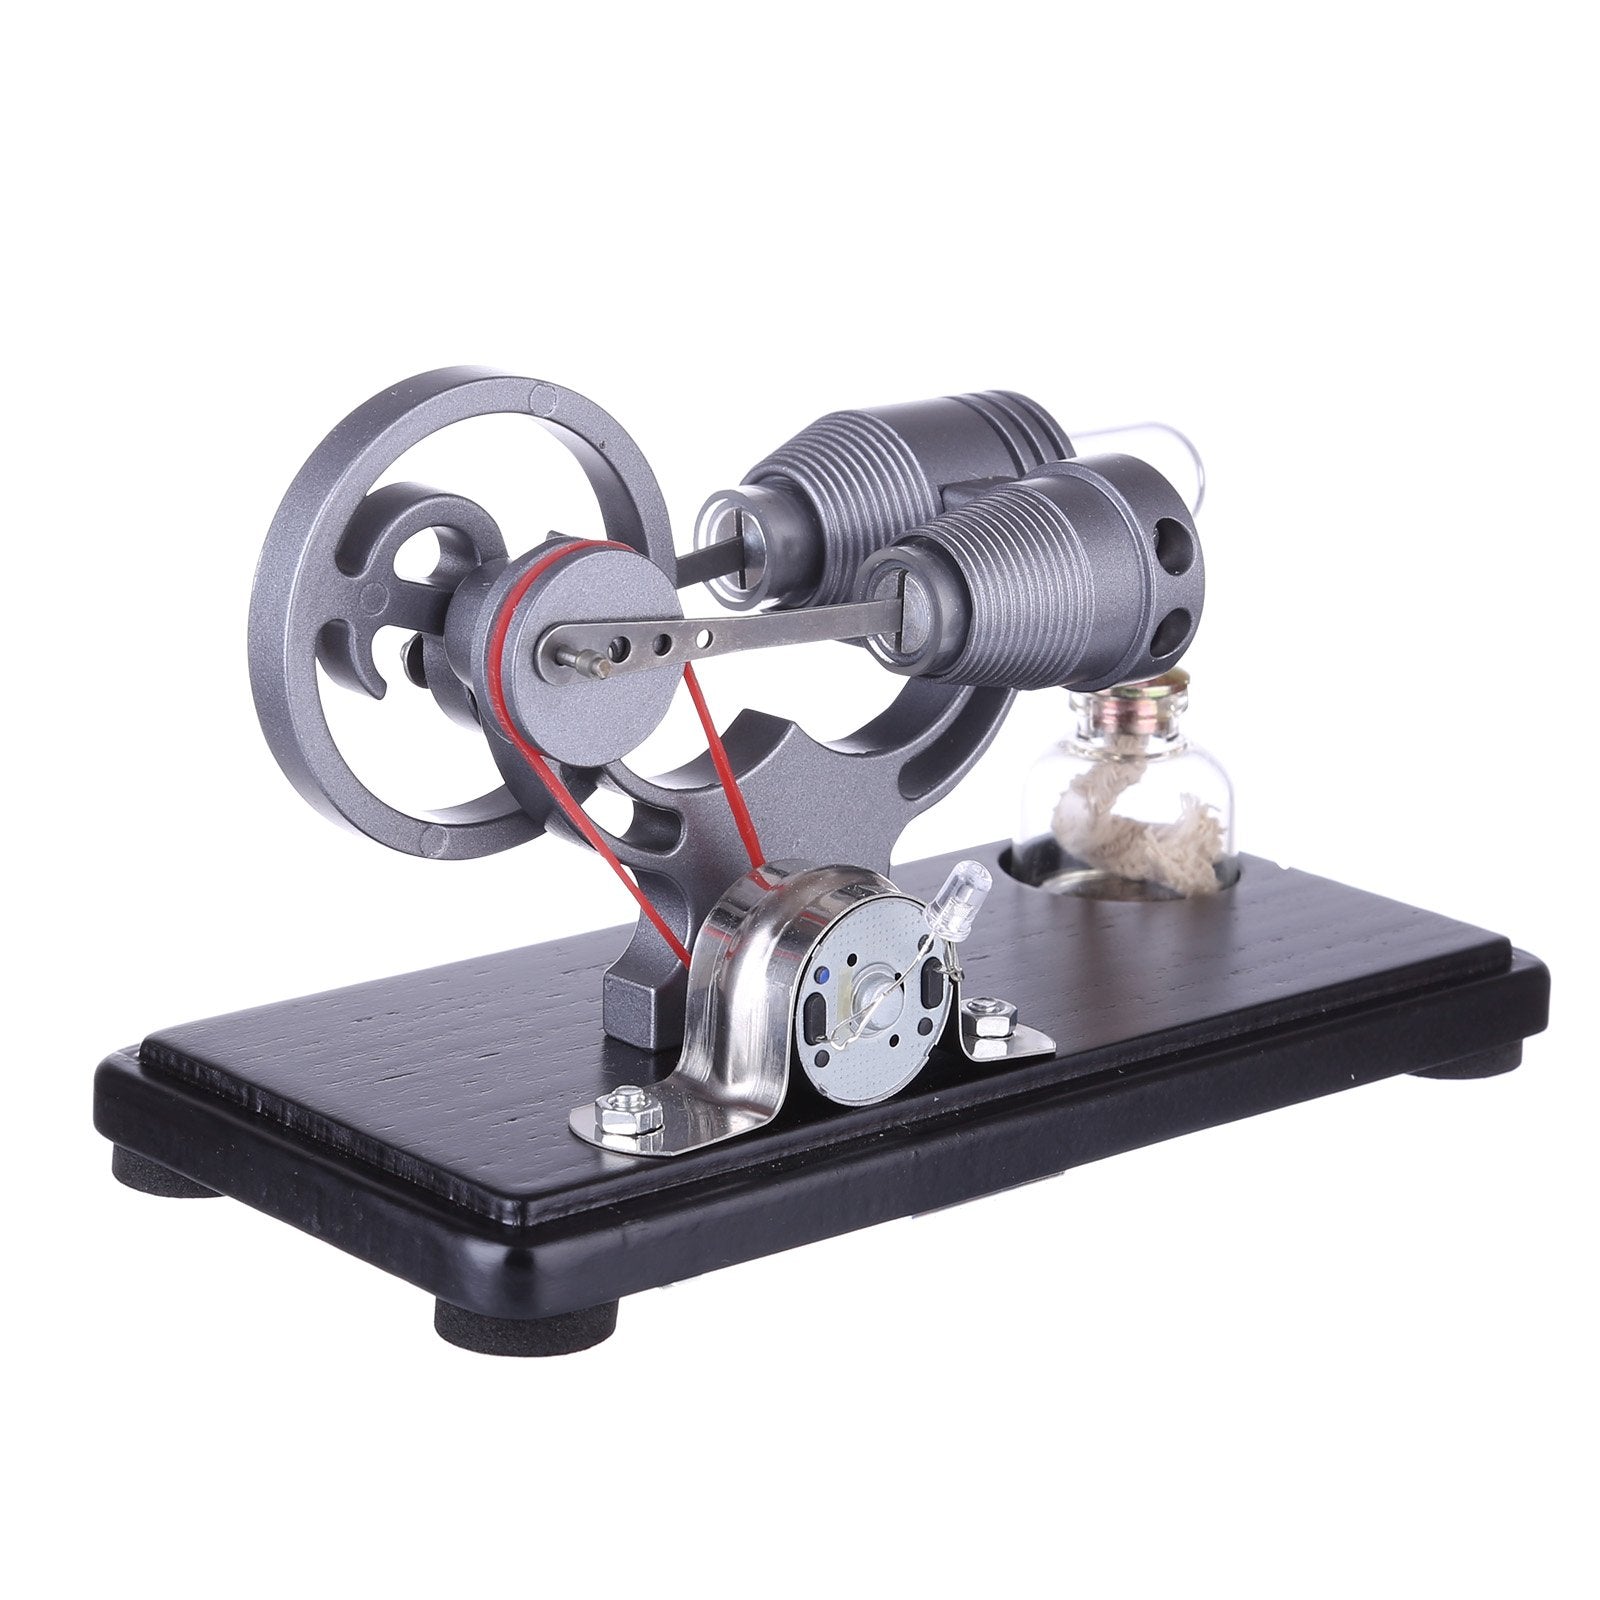 DIY γ-shape Assembly Led Stirling Engine Kit Generator Sterling Model Retro Science Educational Toy